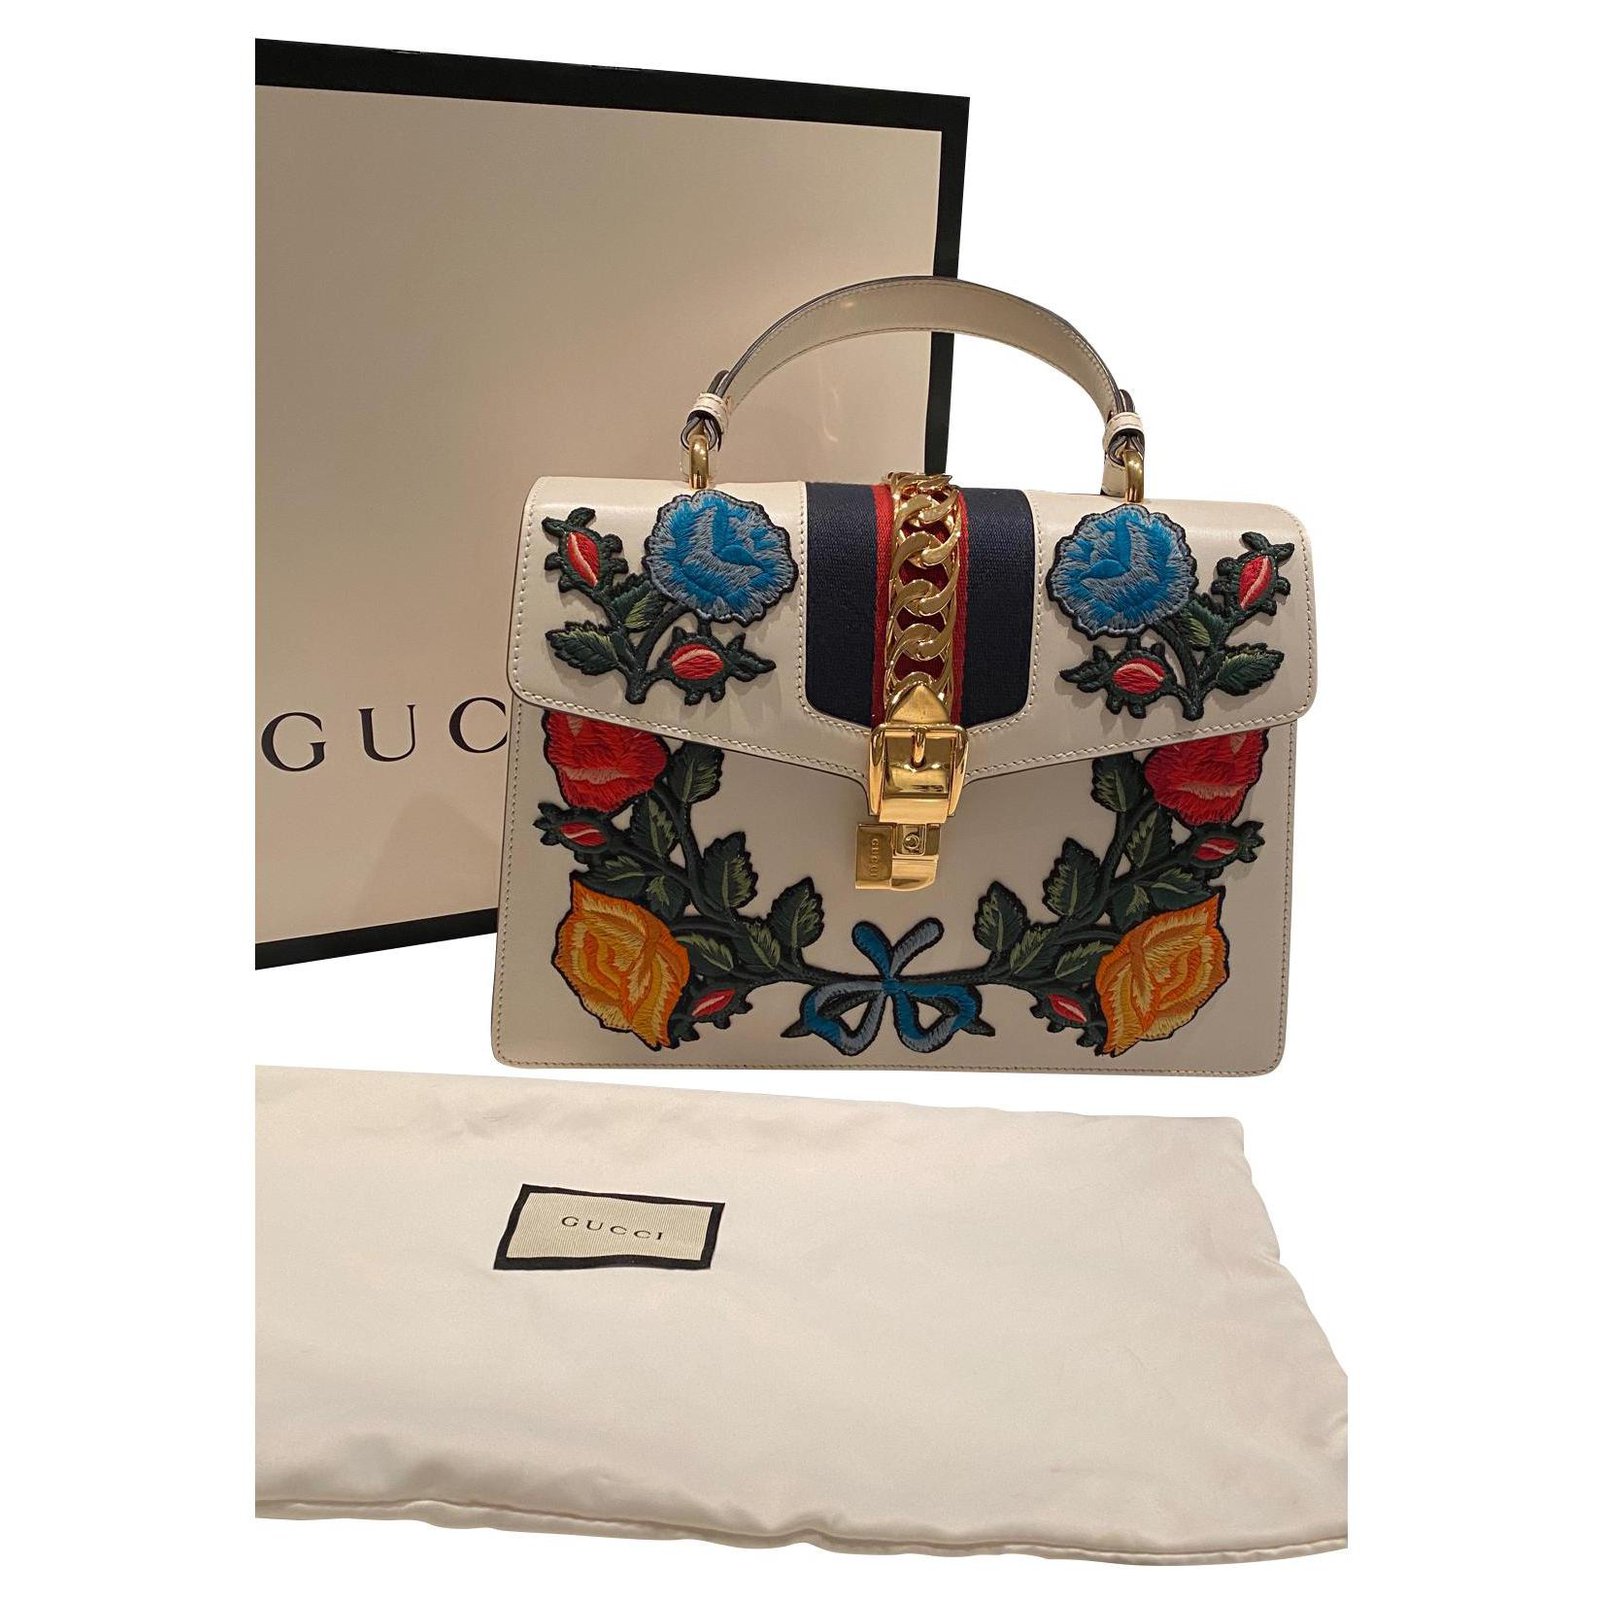 Gucci Sylvie Handbags Leather White ref 